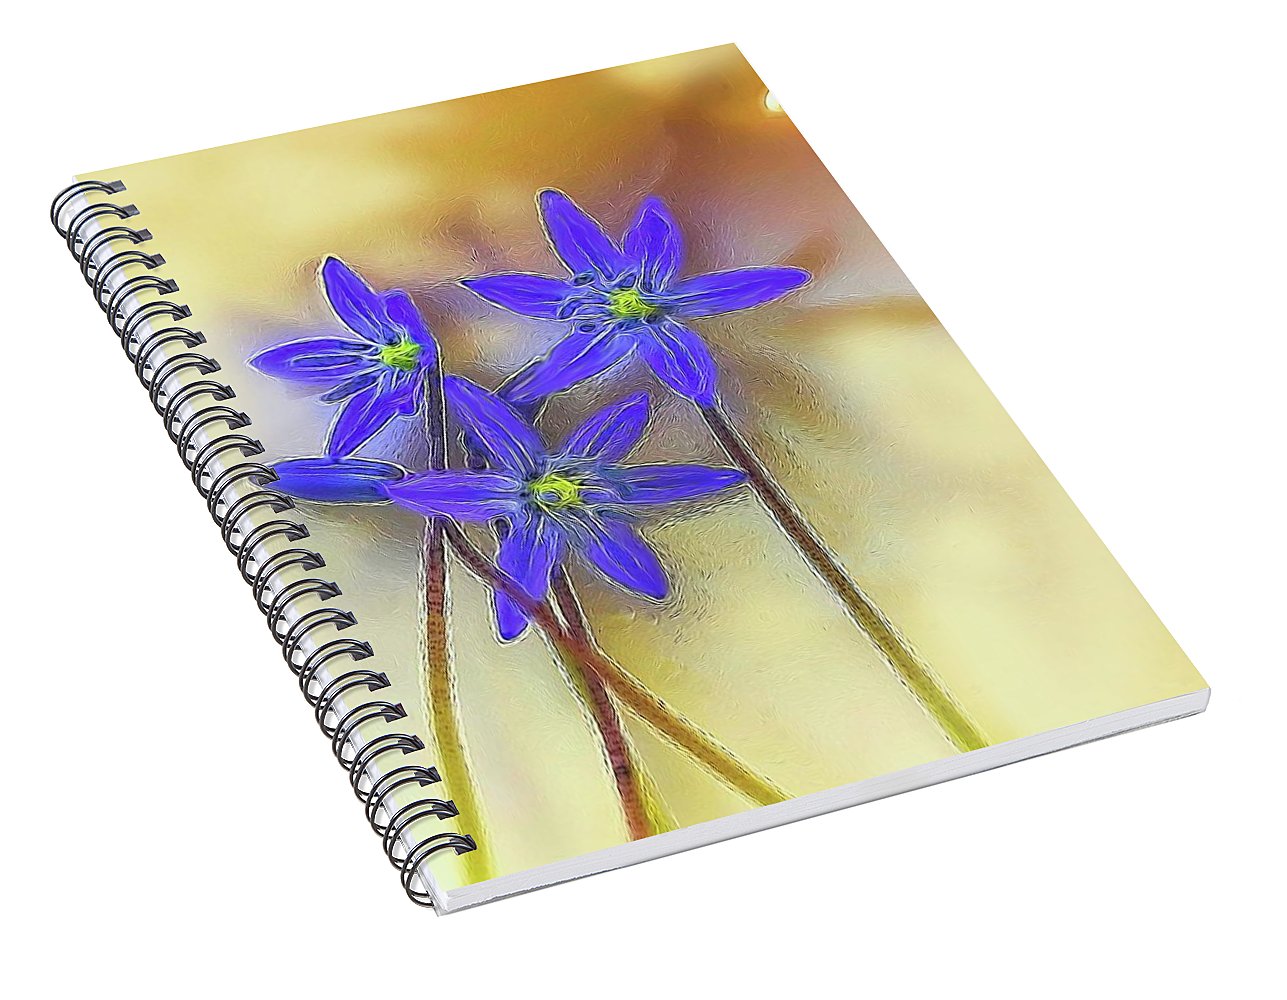 April Flowers - Spiral Notebook